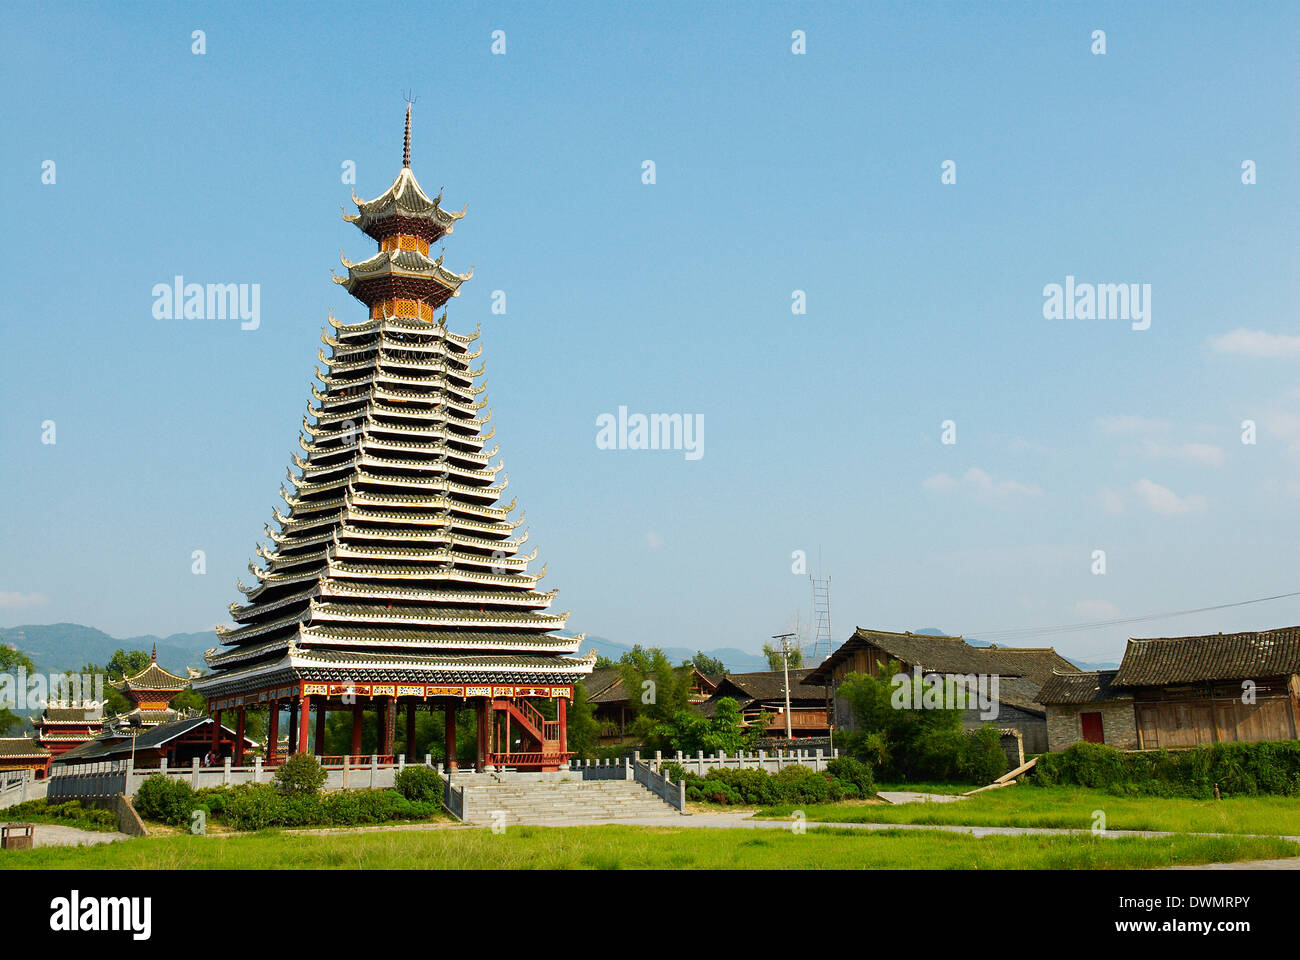 Drum Tower at Rongjiang, Guizhou Province, China, Asia Stock Photo